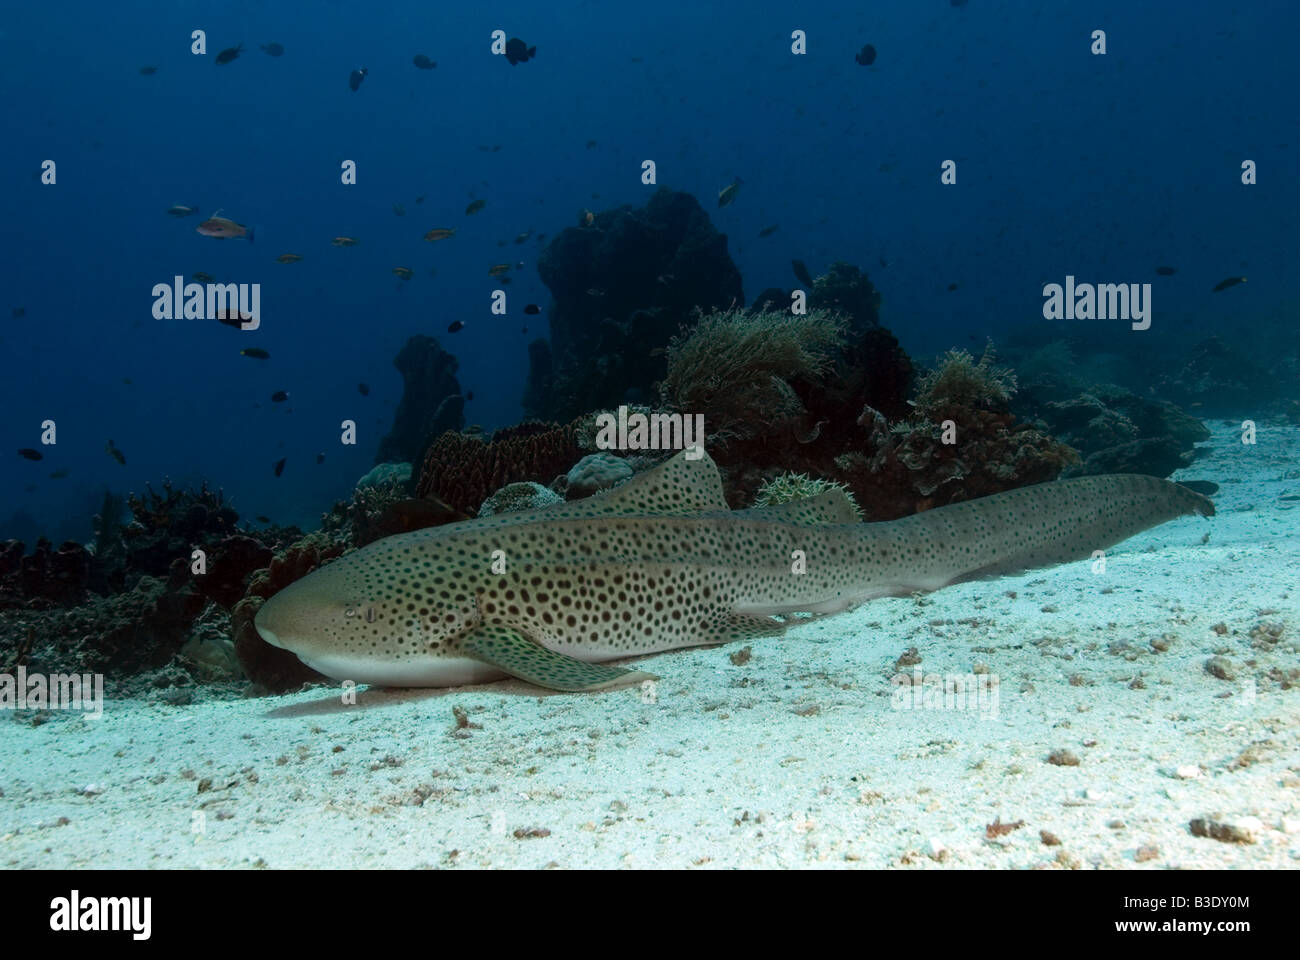 Leopard shark lying on the bottom under water Stock Photo